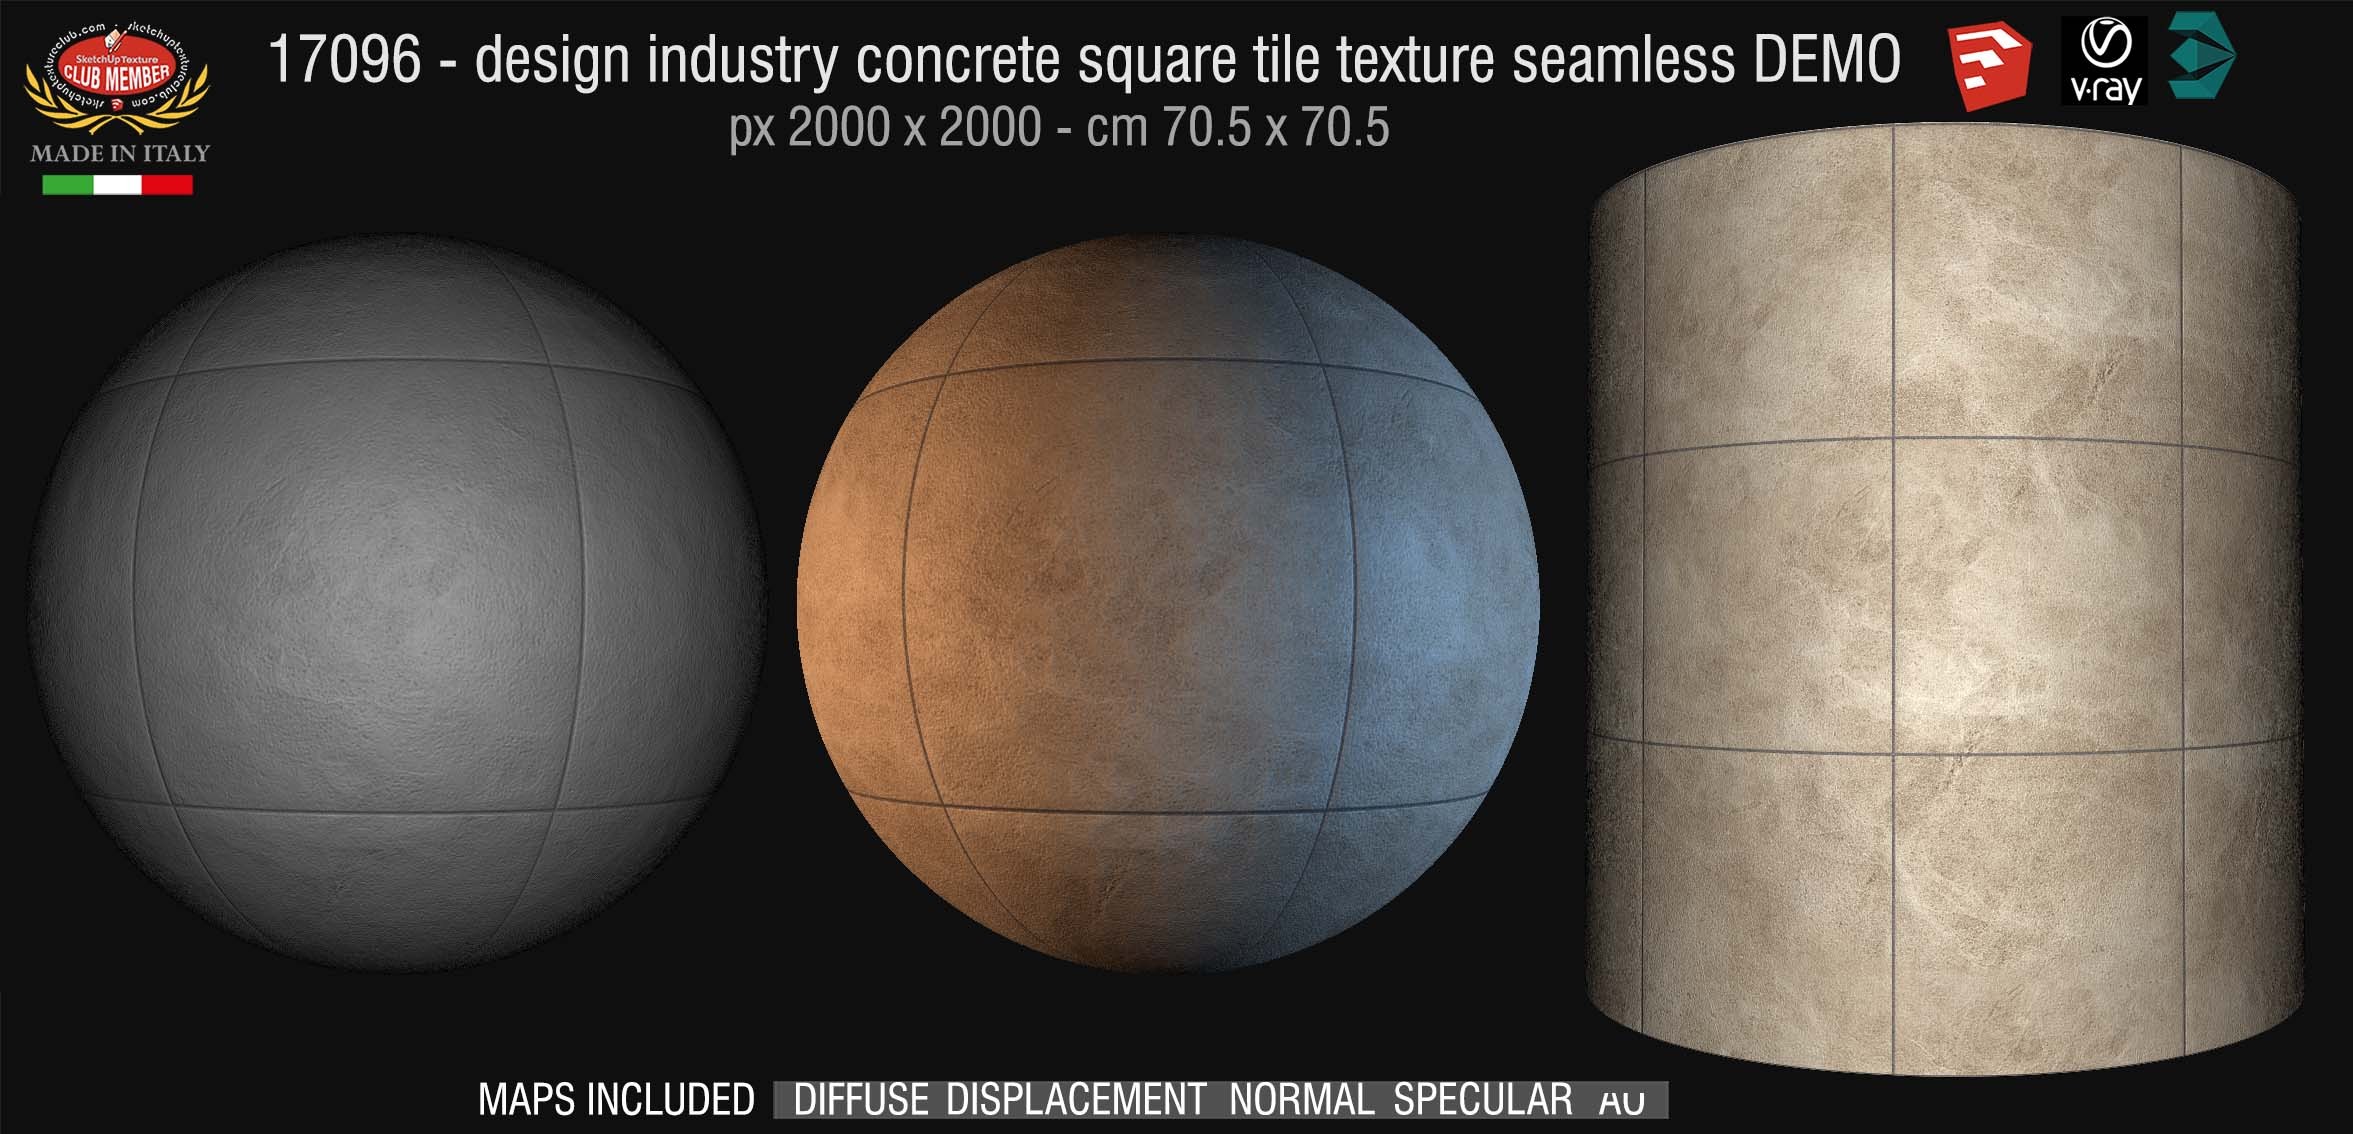 17096 HR Design industry concrete square tile texture seamless + maps DEMO